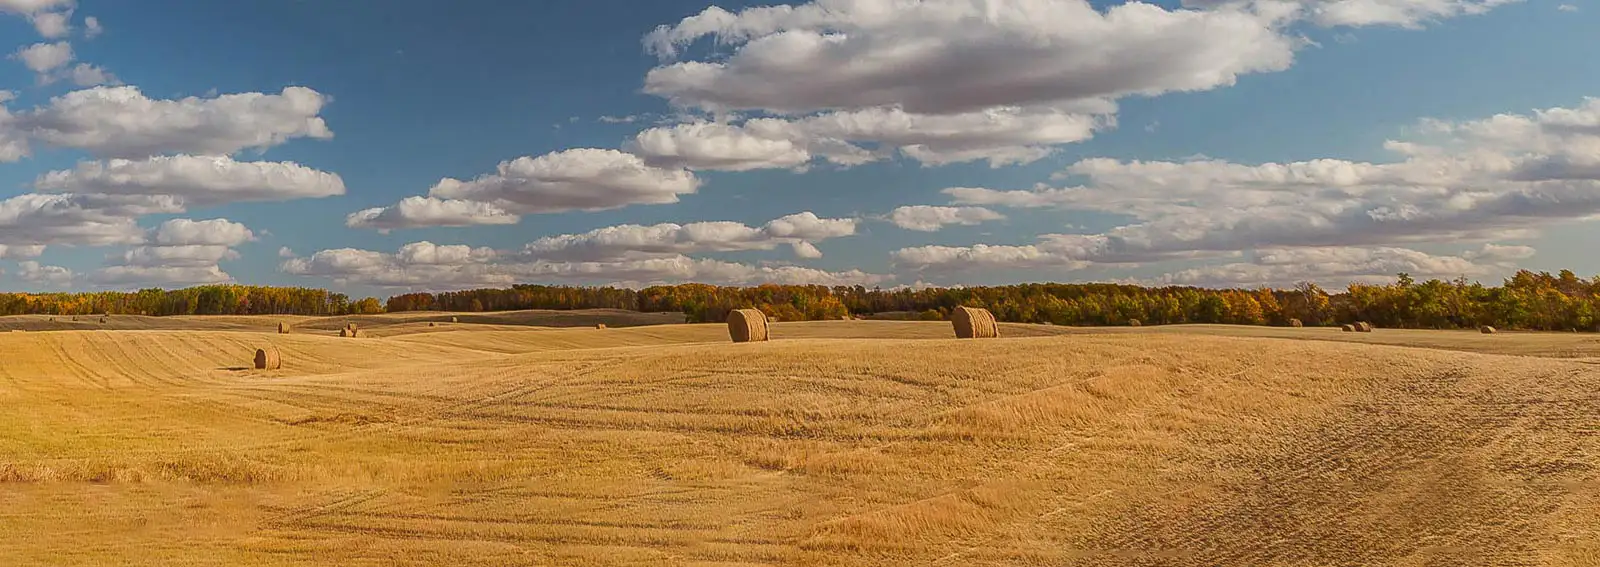 prairie field with hay bales